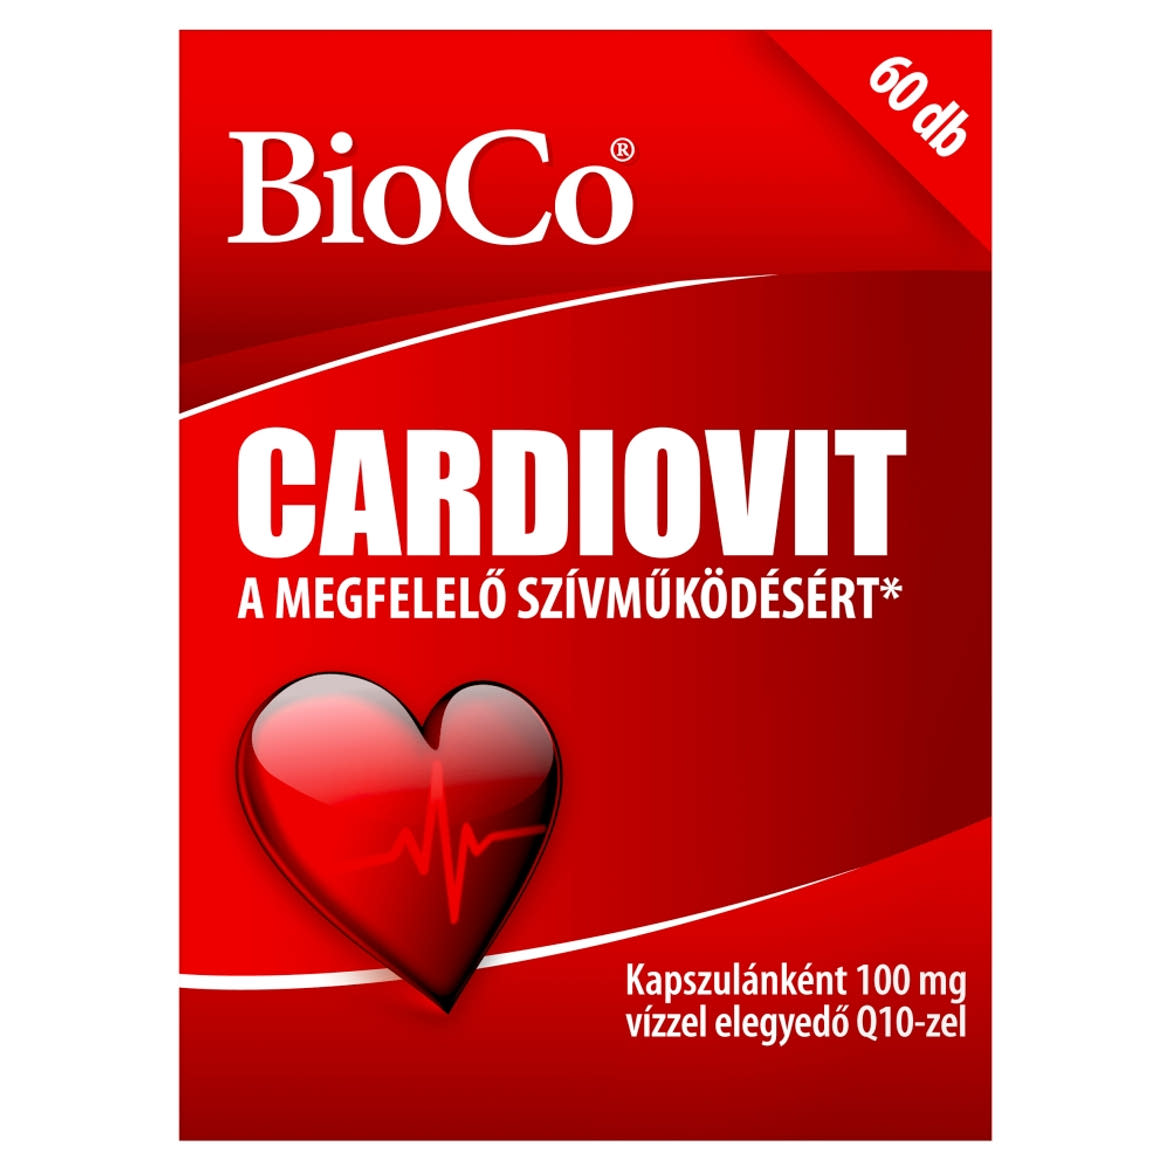 BioCo Cardiovit kapszula 60 x 0,61 g (36,6 g)